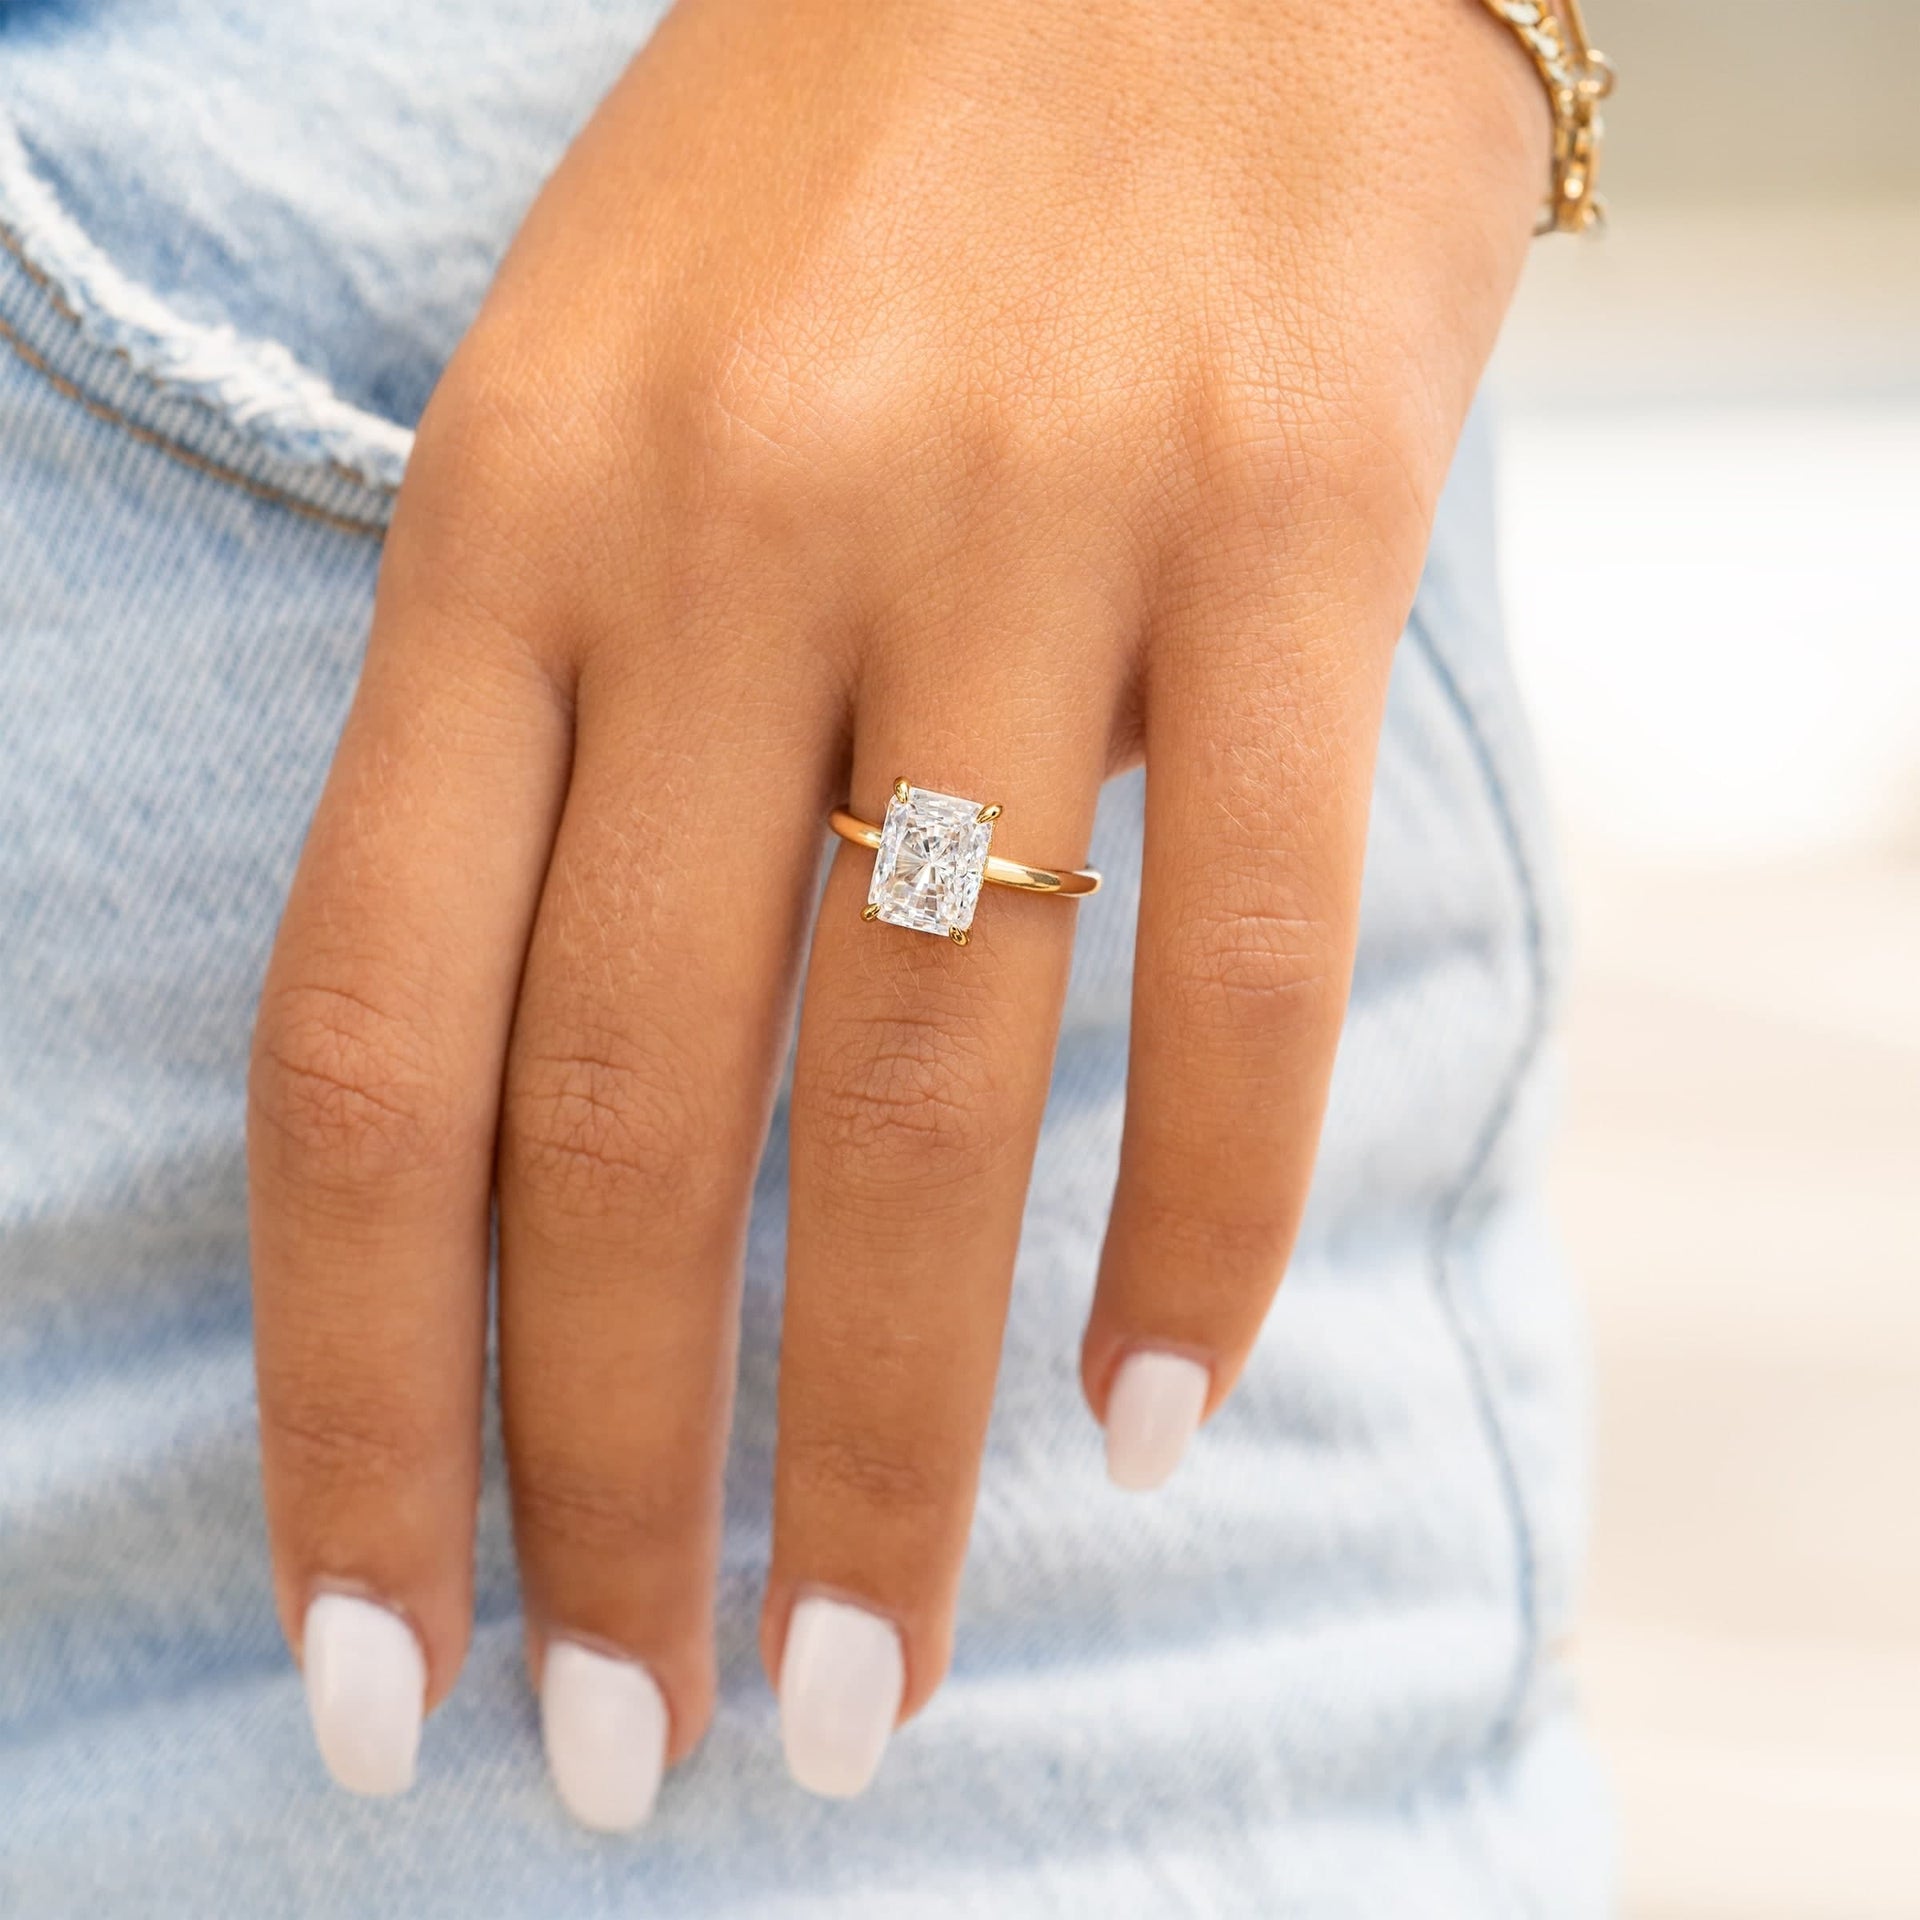 Radiant cut diamond alternative ring with hidden halo.